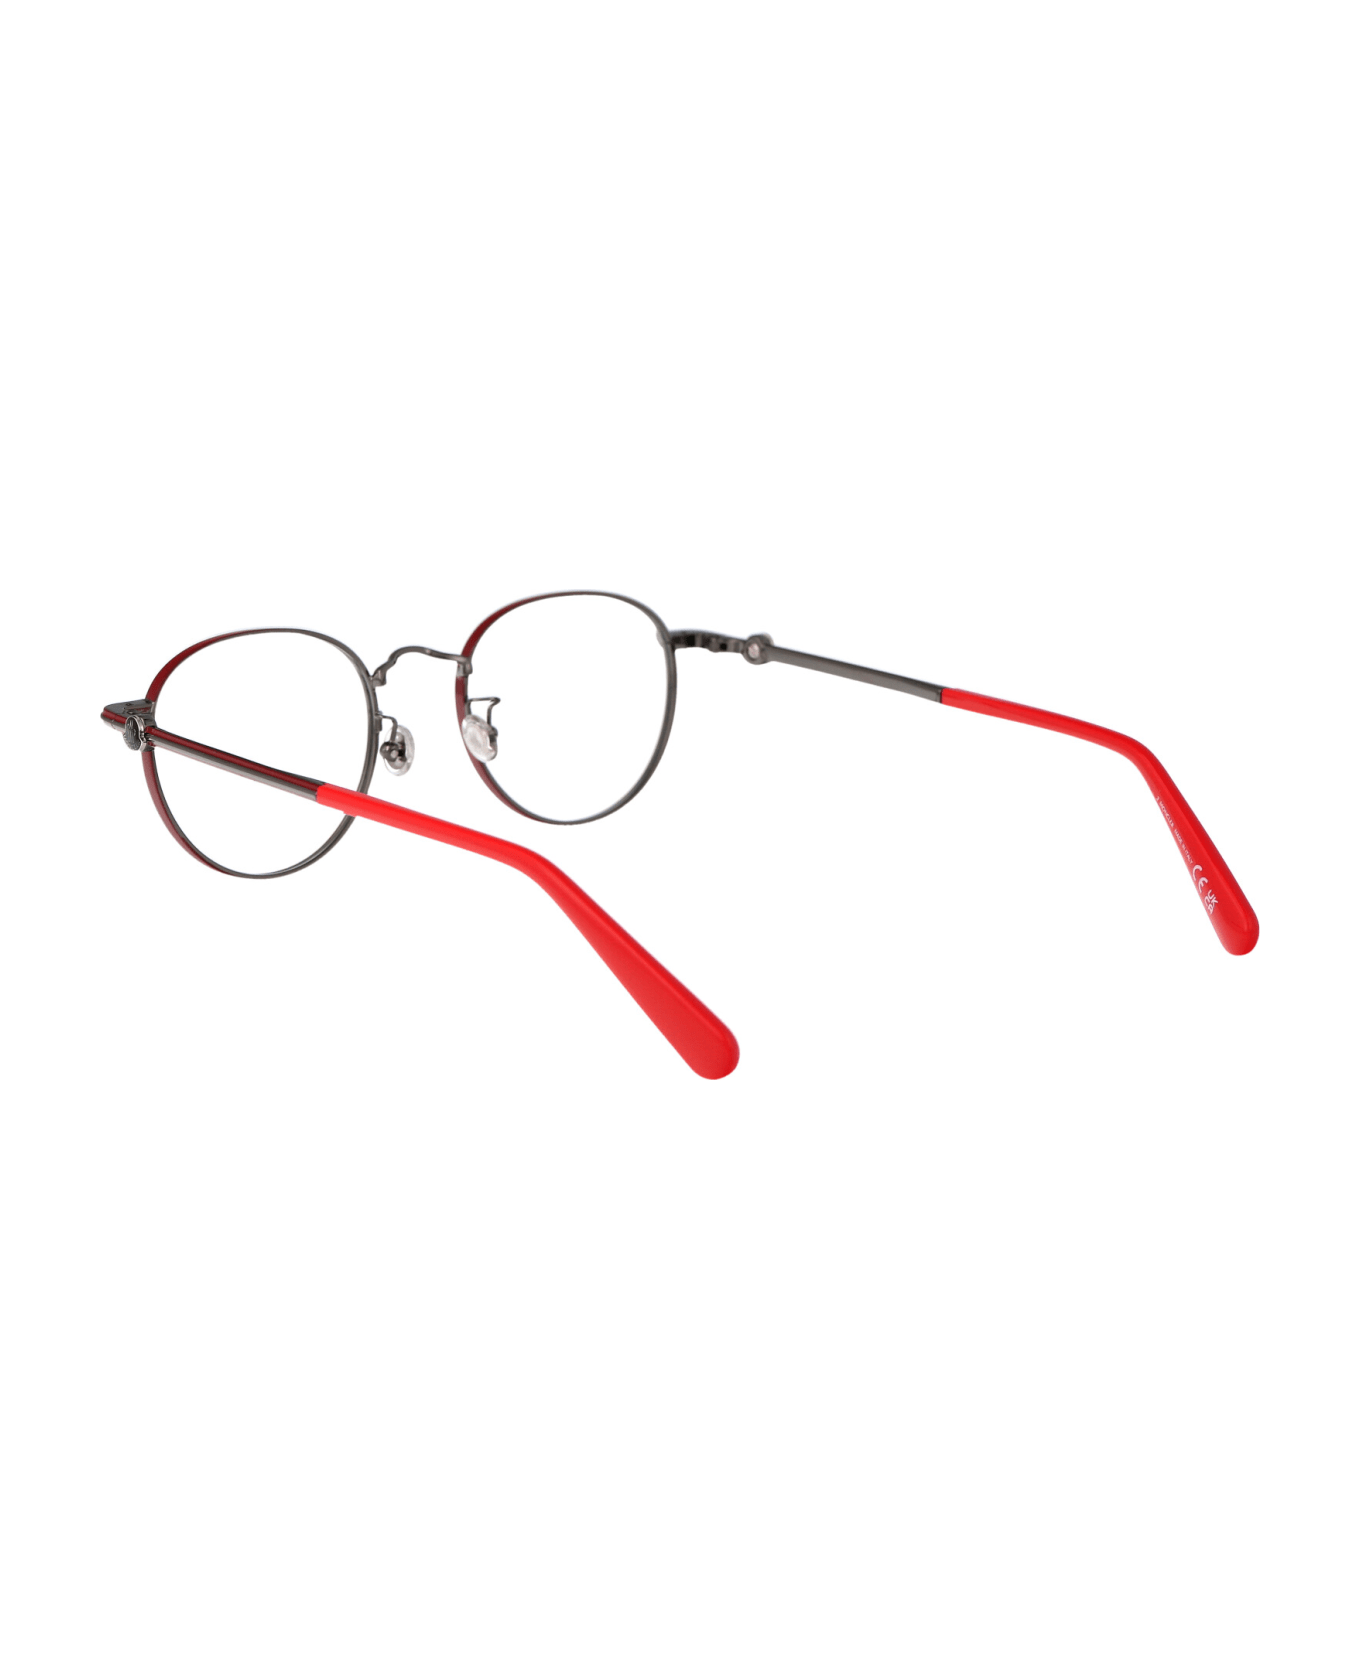 Moncler Eyewear Ml5204 Glasses - 066 Bordeaux Lucido